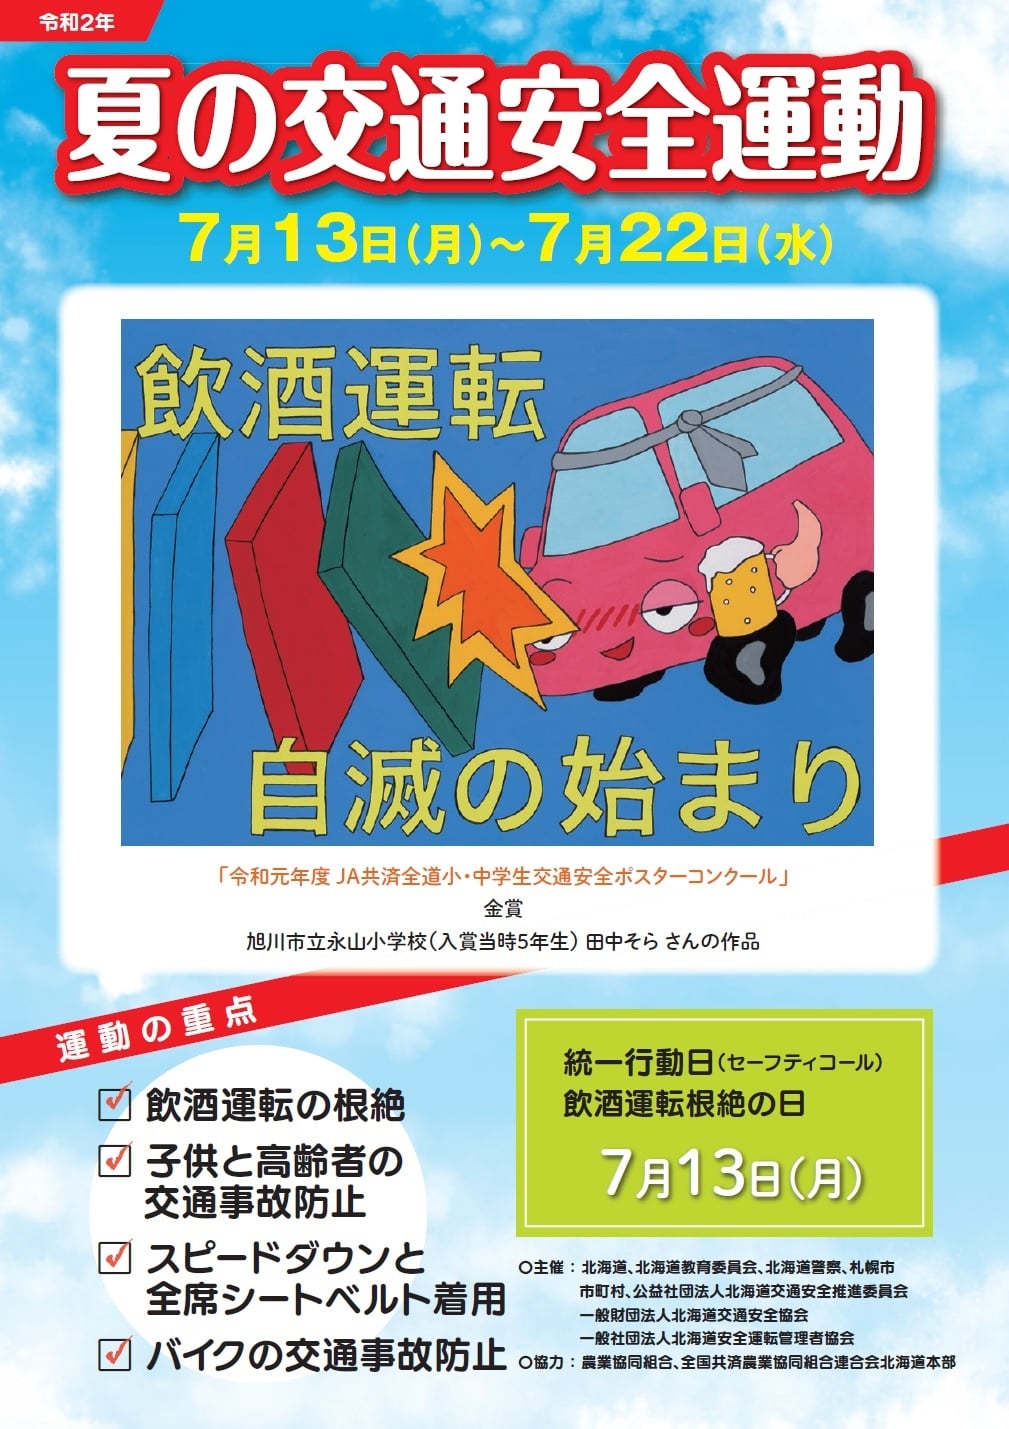 令和2年 夏の交通安全運動 公益社団法人北海道交通安全推進委員会 公式ホームページ